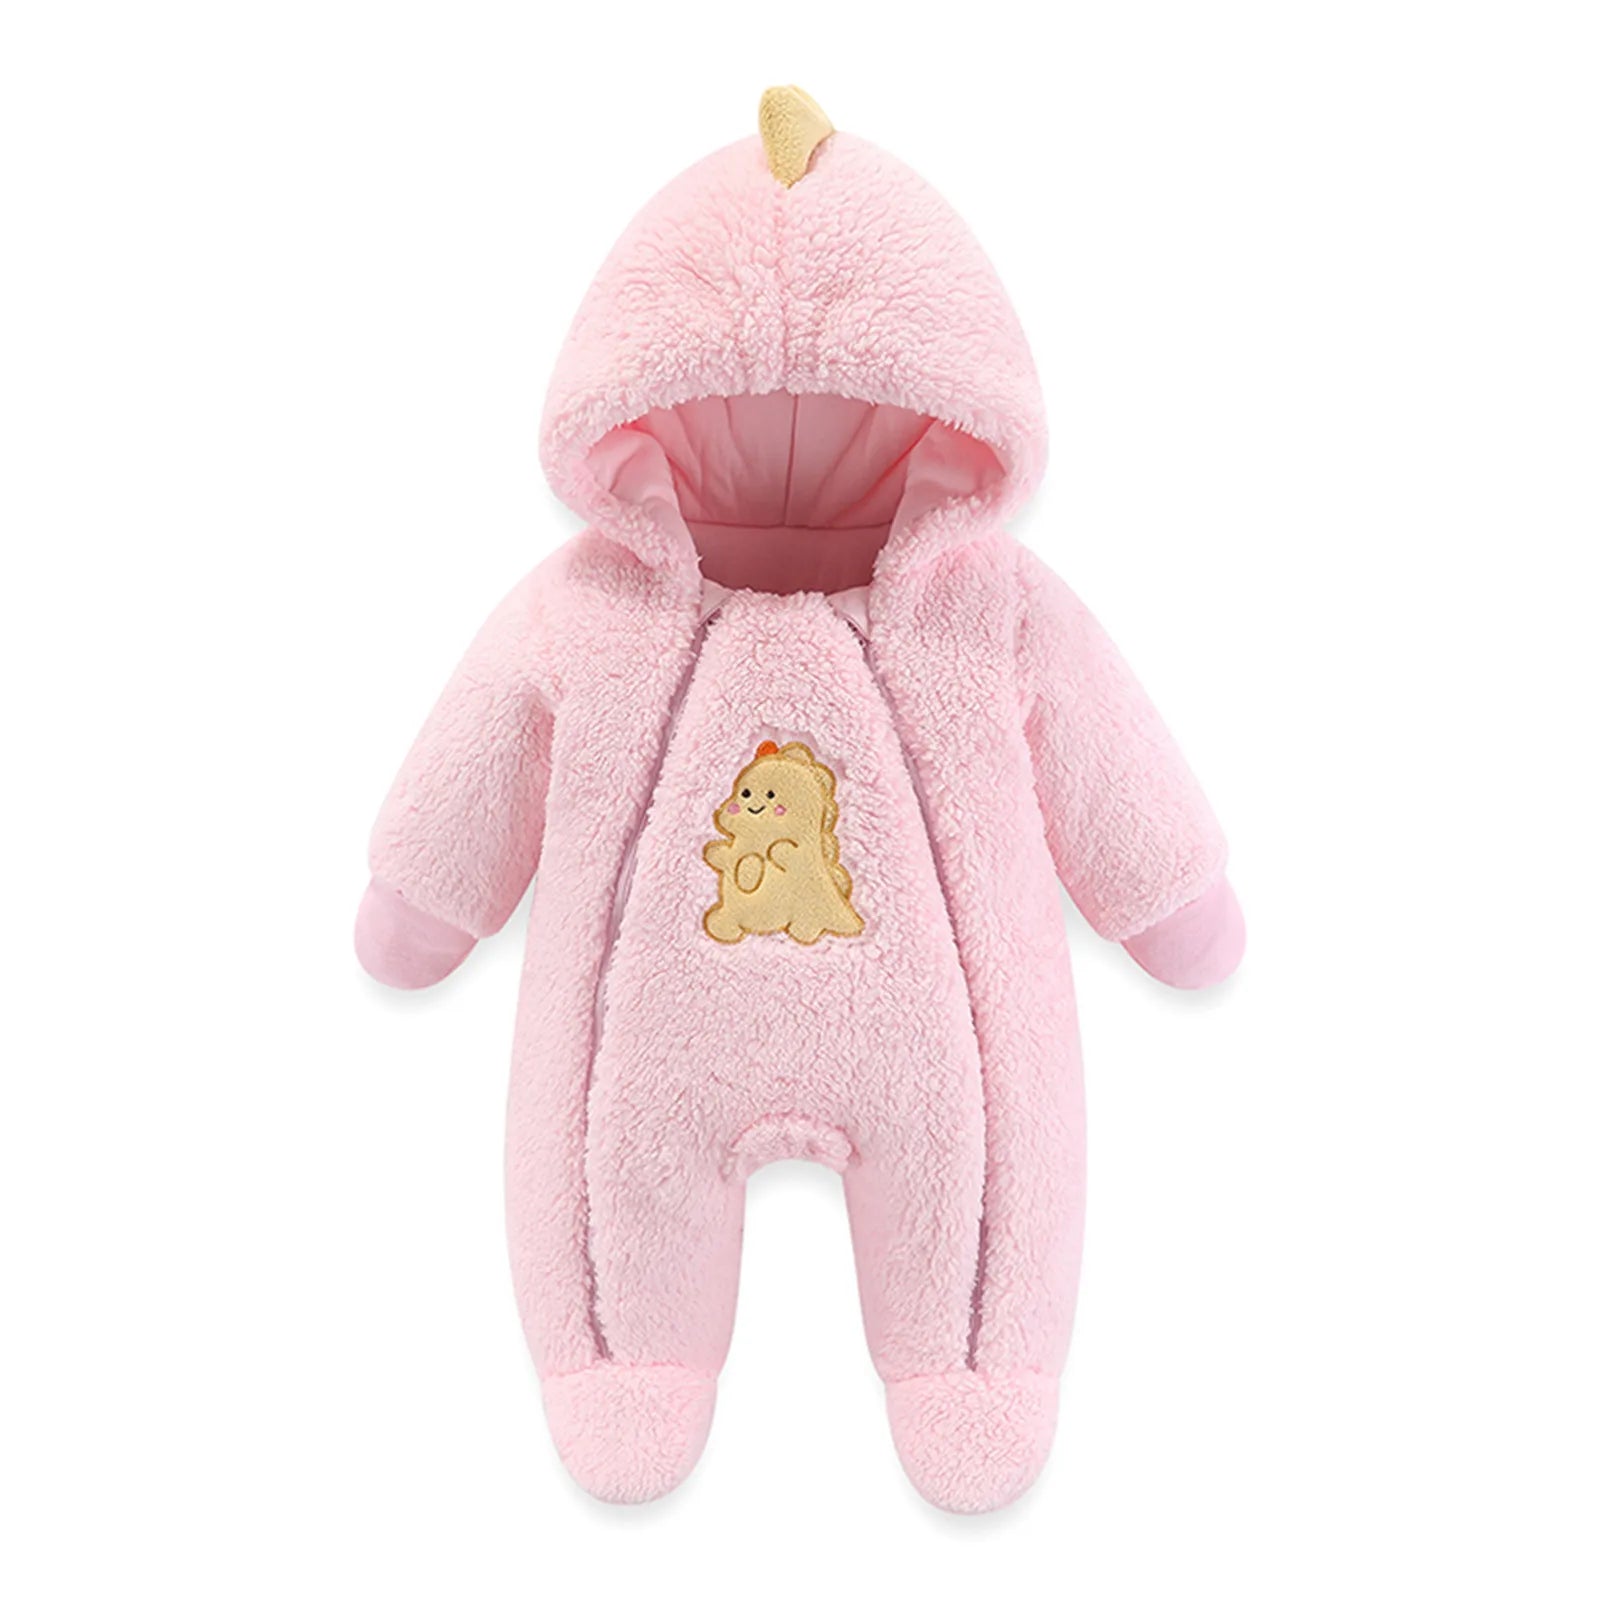 Infant Unisex Baby Fleece Jumpsuit Long Sleeve Cartoon Hooded Romper pink United States by Baby Minaj Cruz